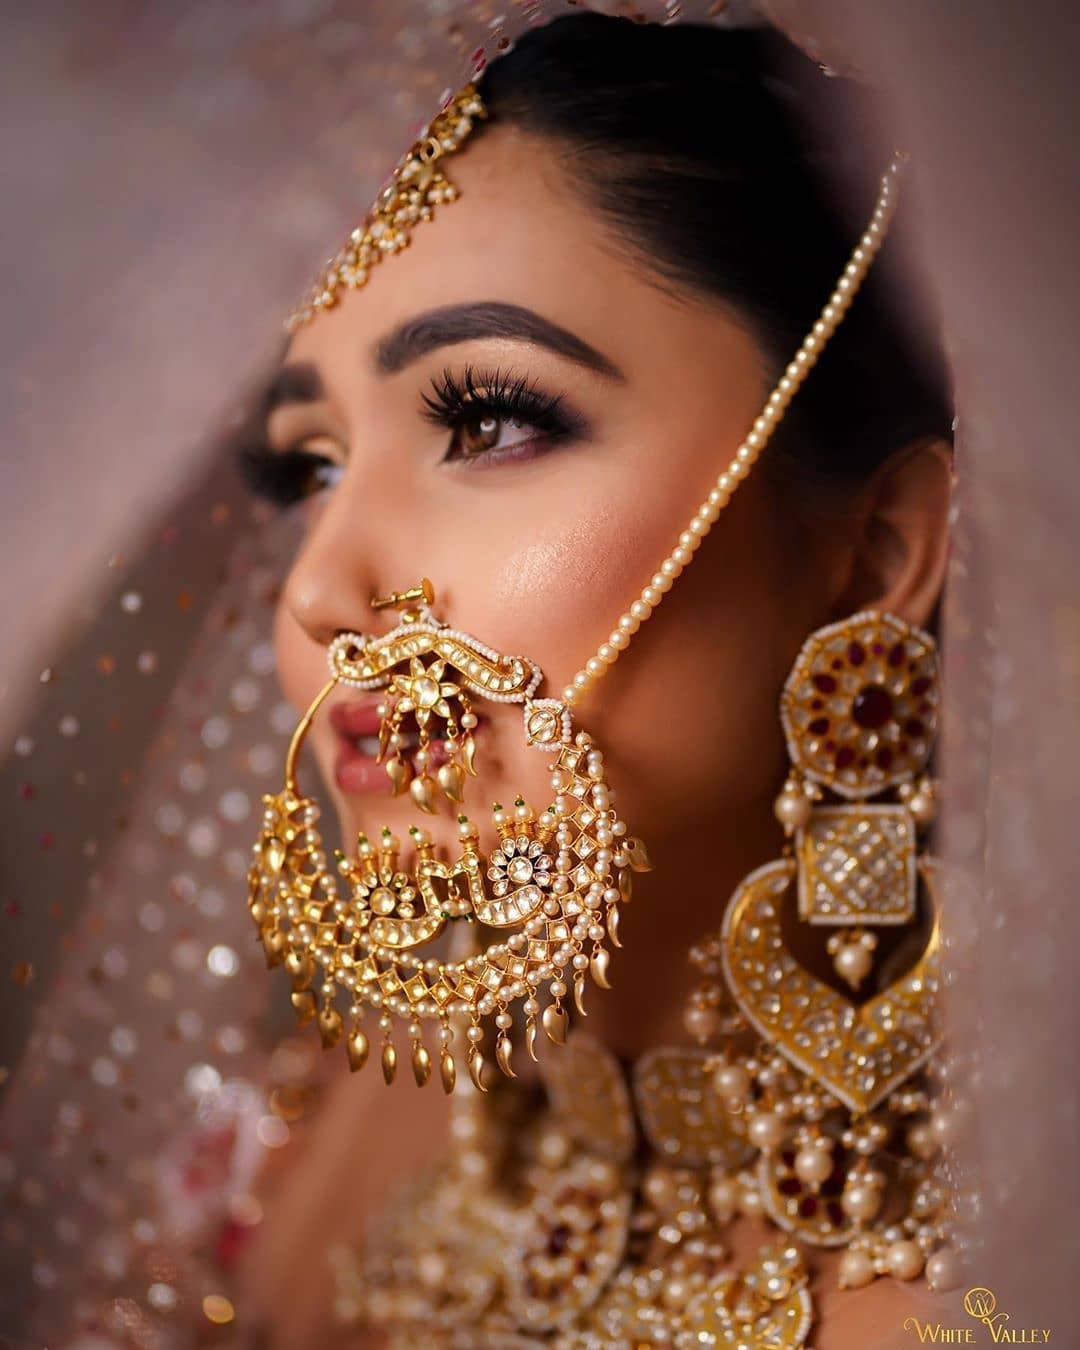 18ct White Gold Nose ring, lip, eyebrow ring earring 18g Stud body  jewellery | eBay